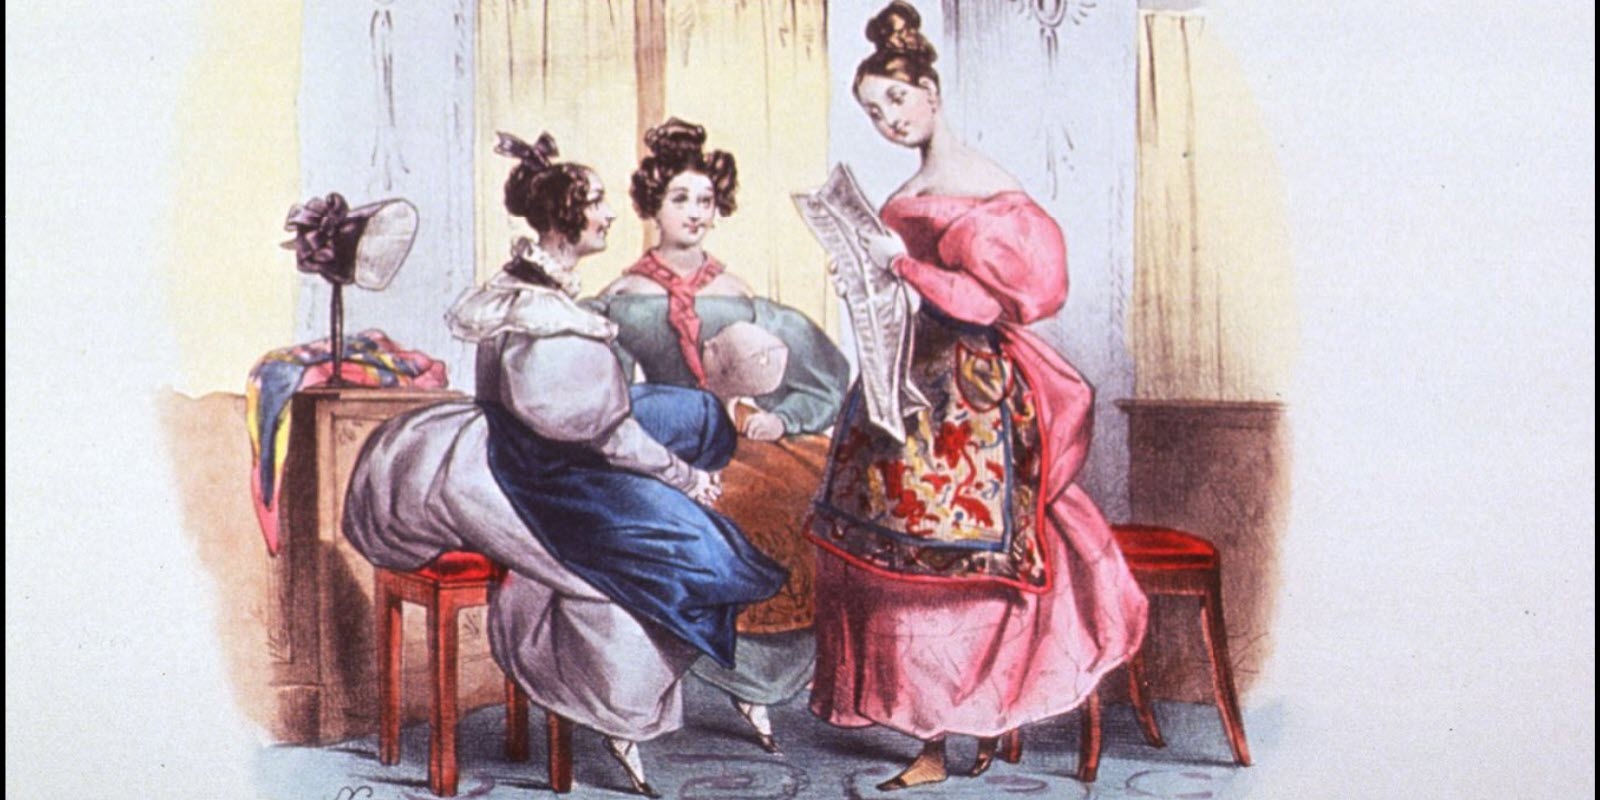 Three well dressed women discussing cholera.